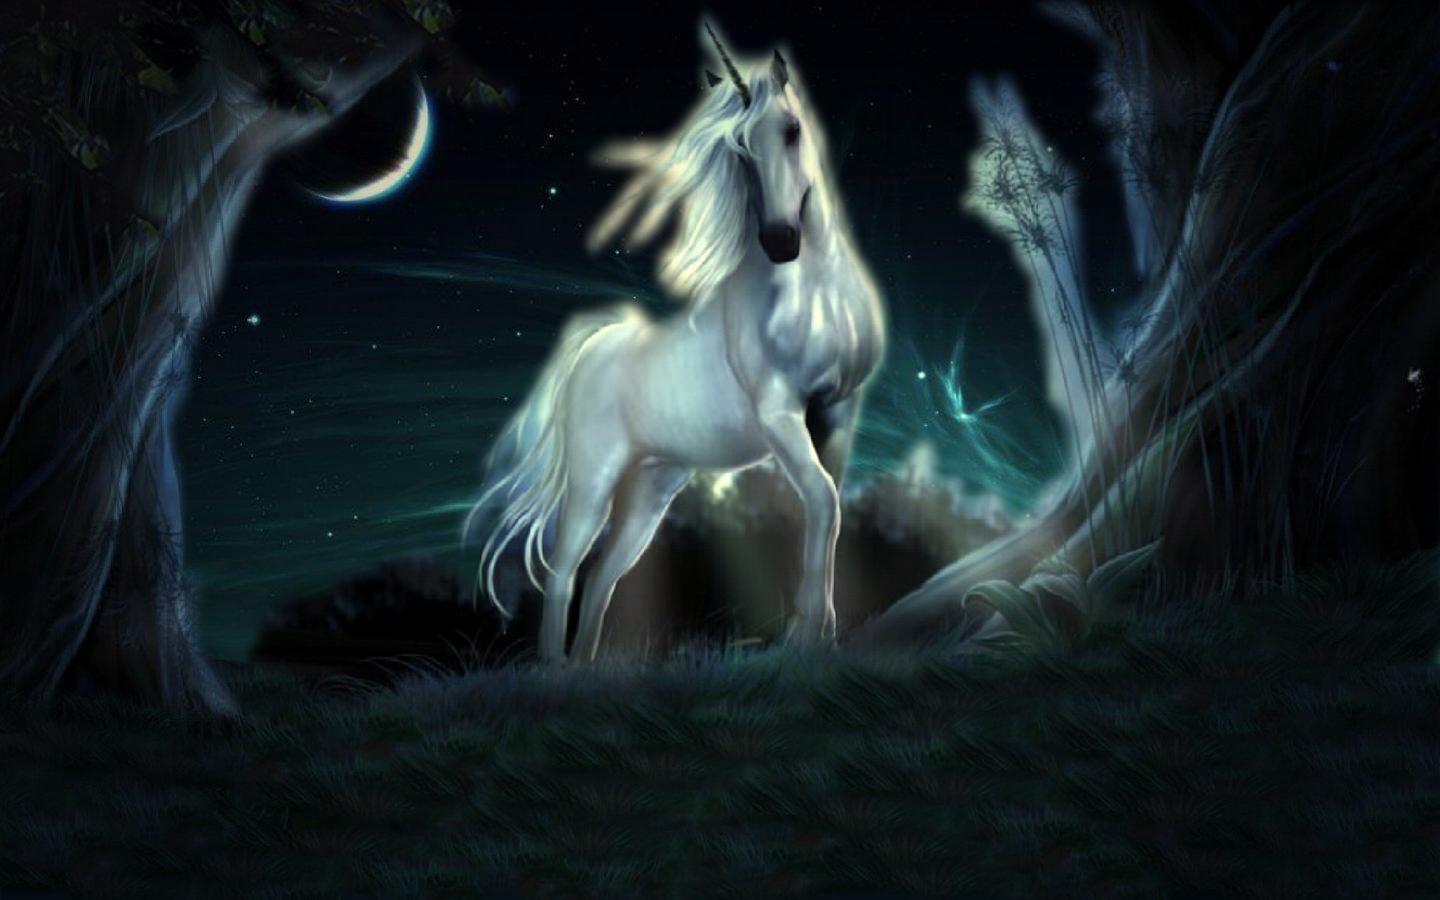 Mystical Unicorn Wallpaper Free Mystical Unicorn